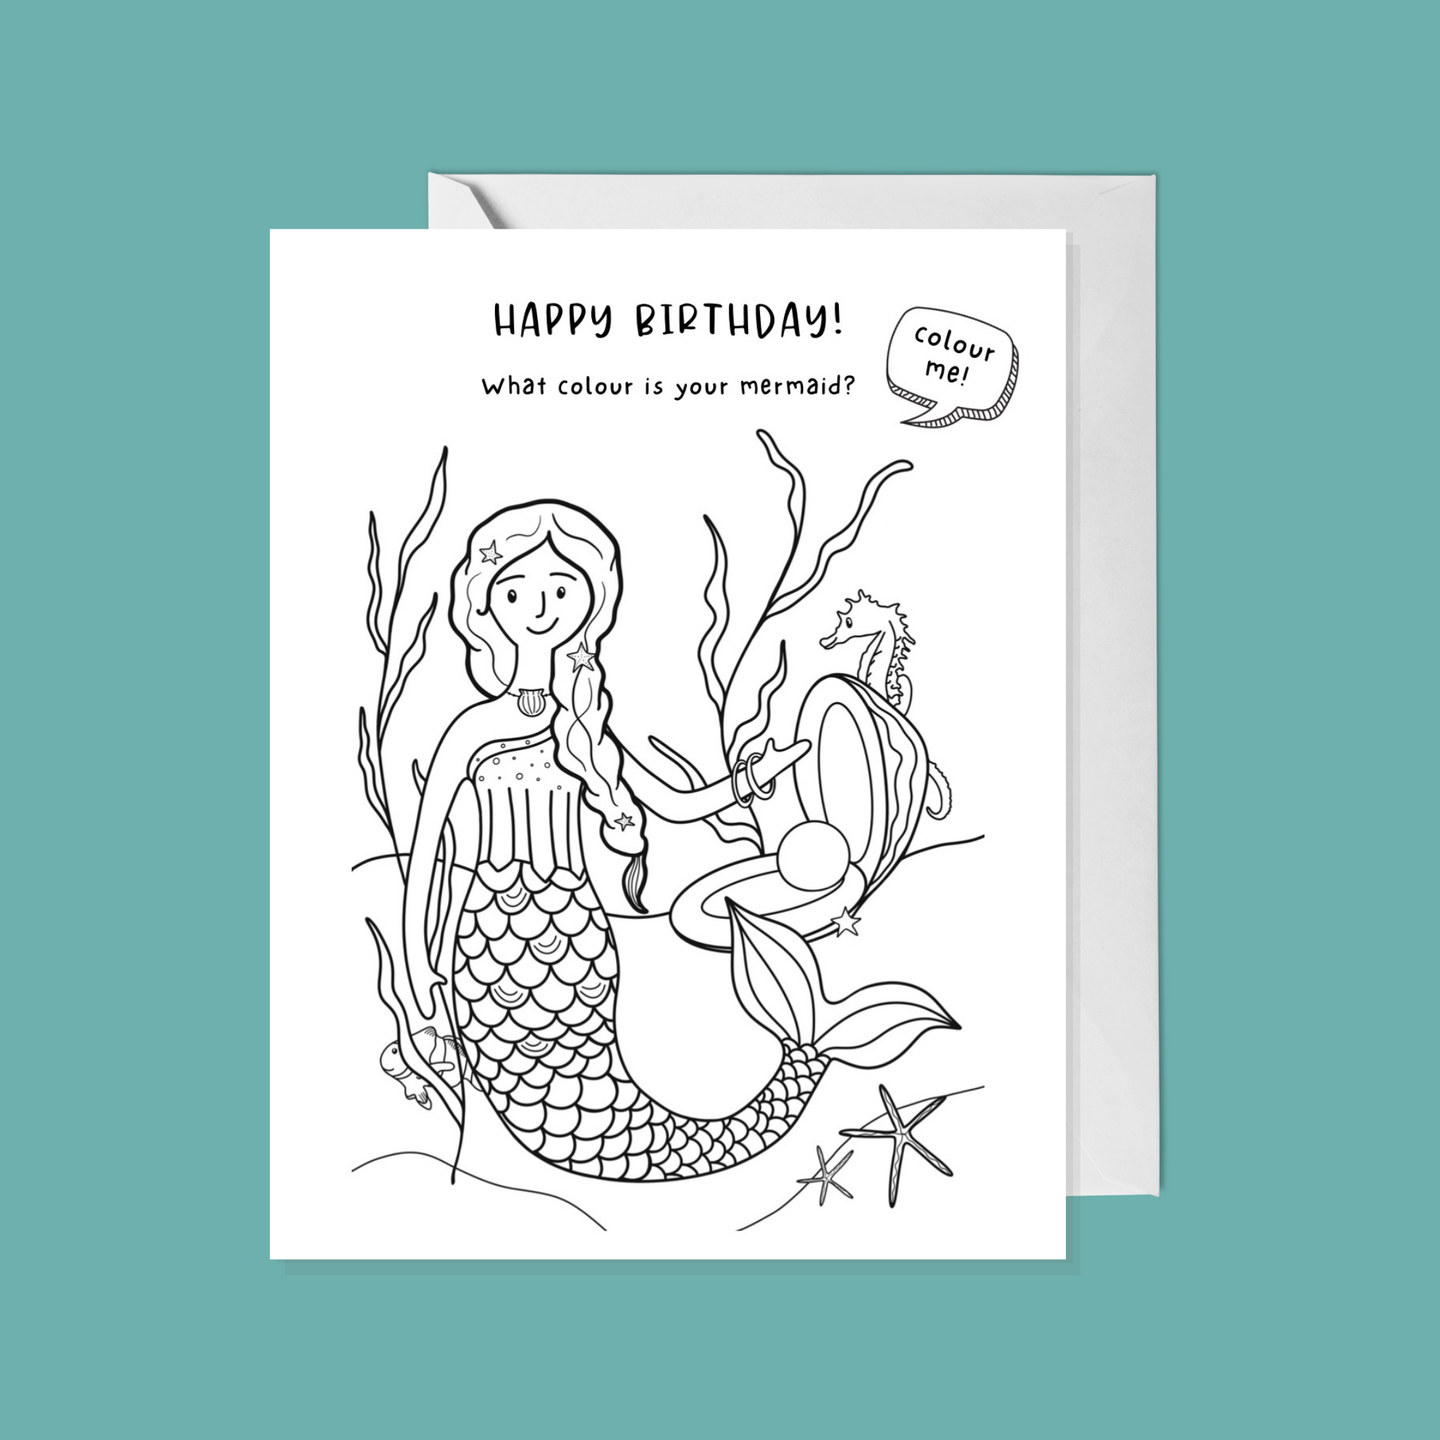 Mermaid birthday